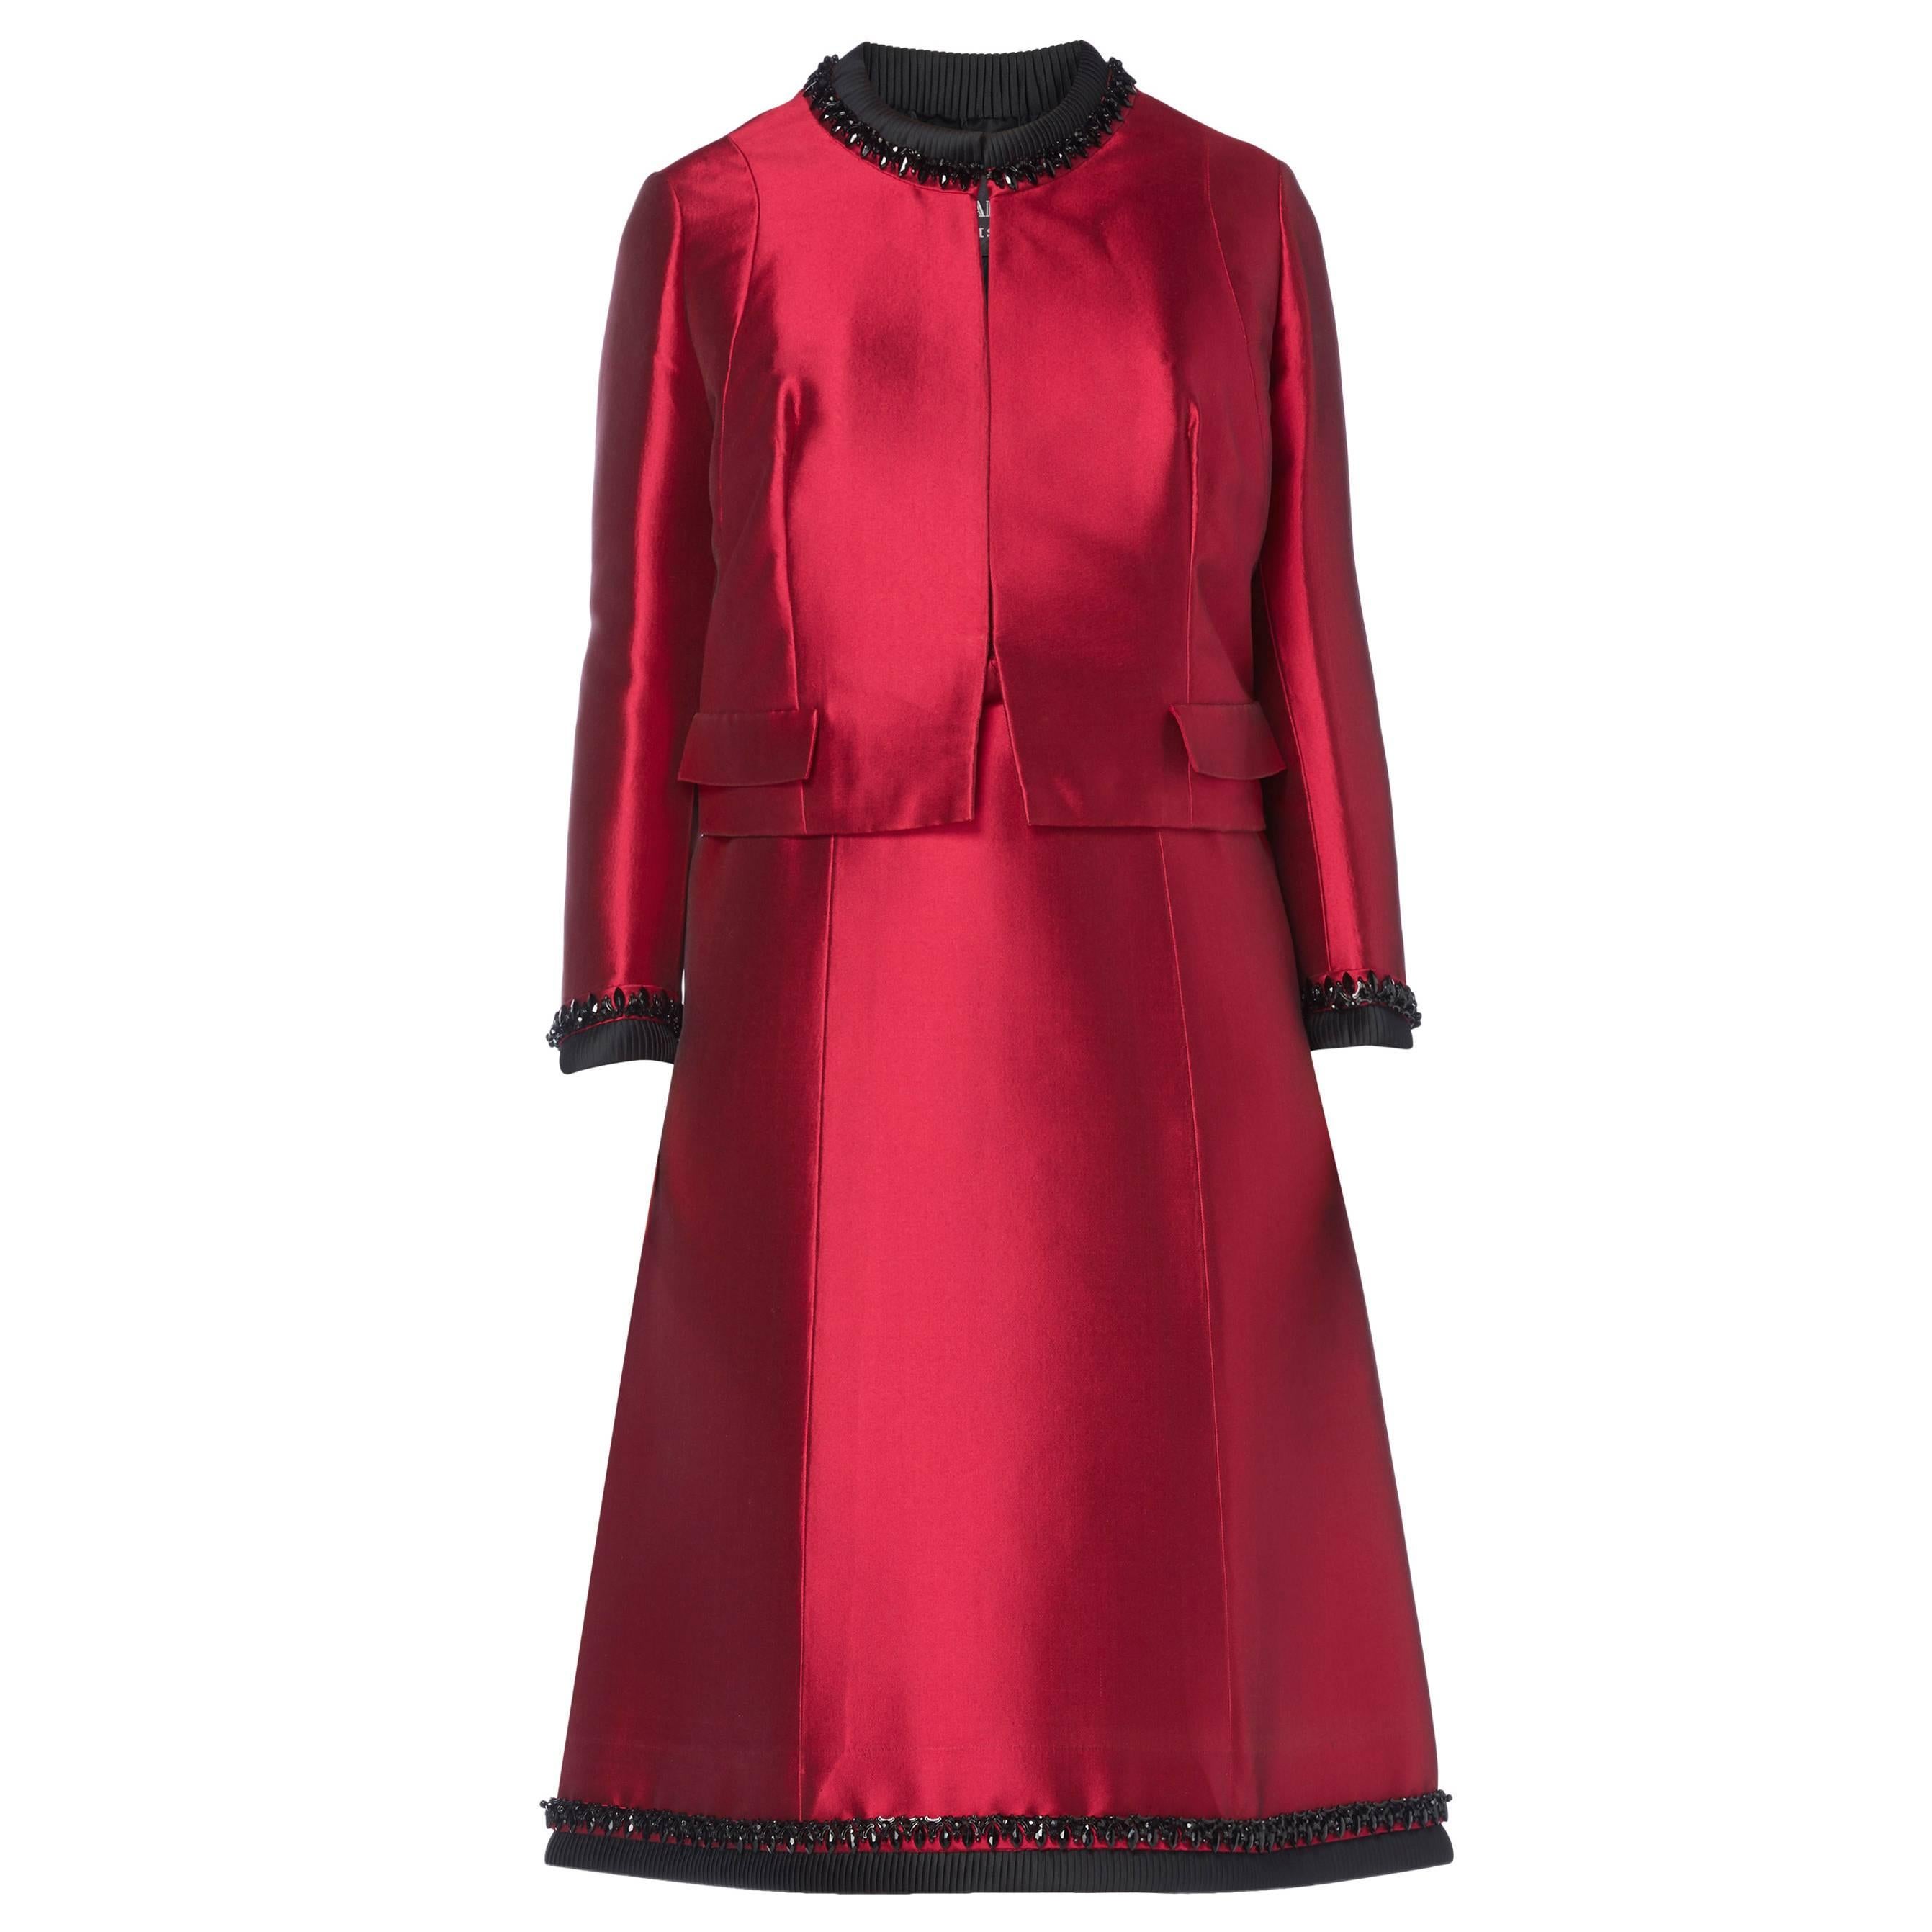 Pierre Balmain haute couture red dress suit, circa 1966 For Sale